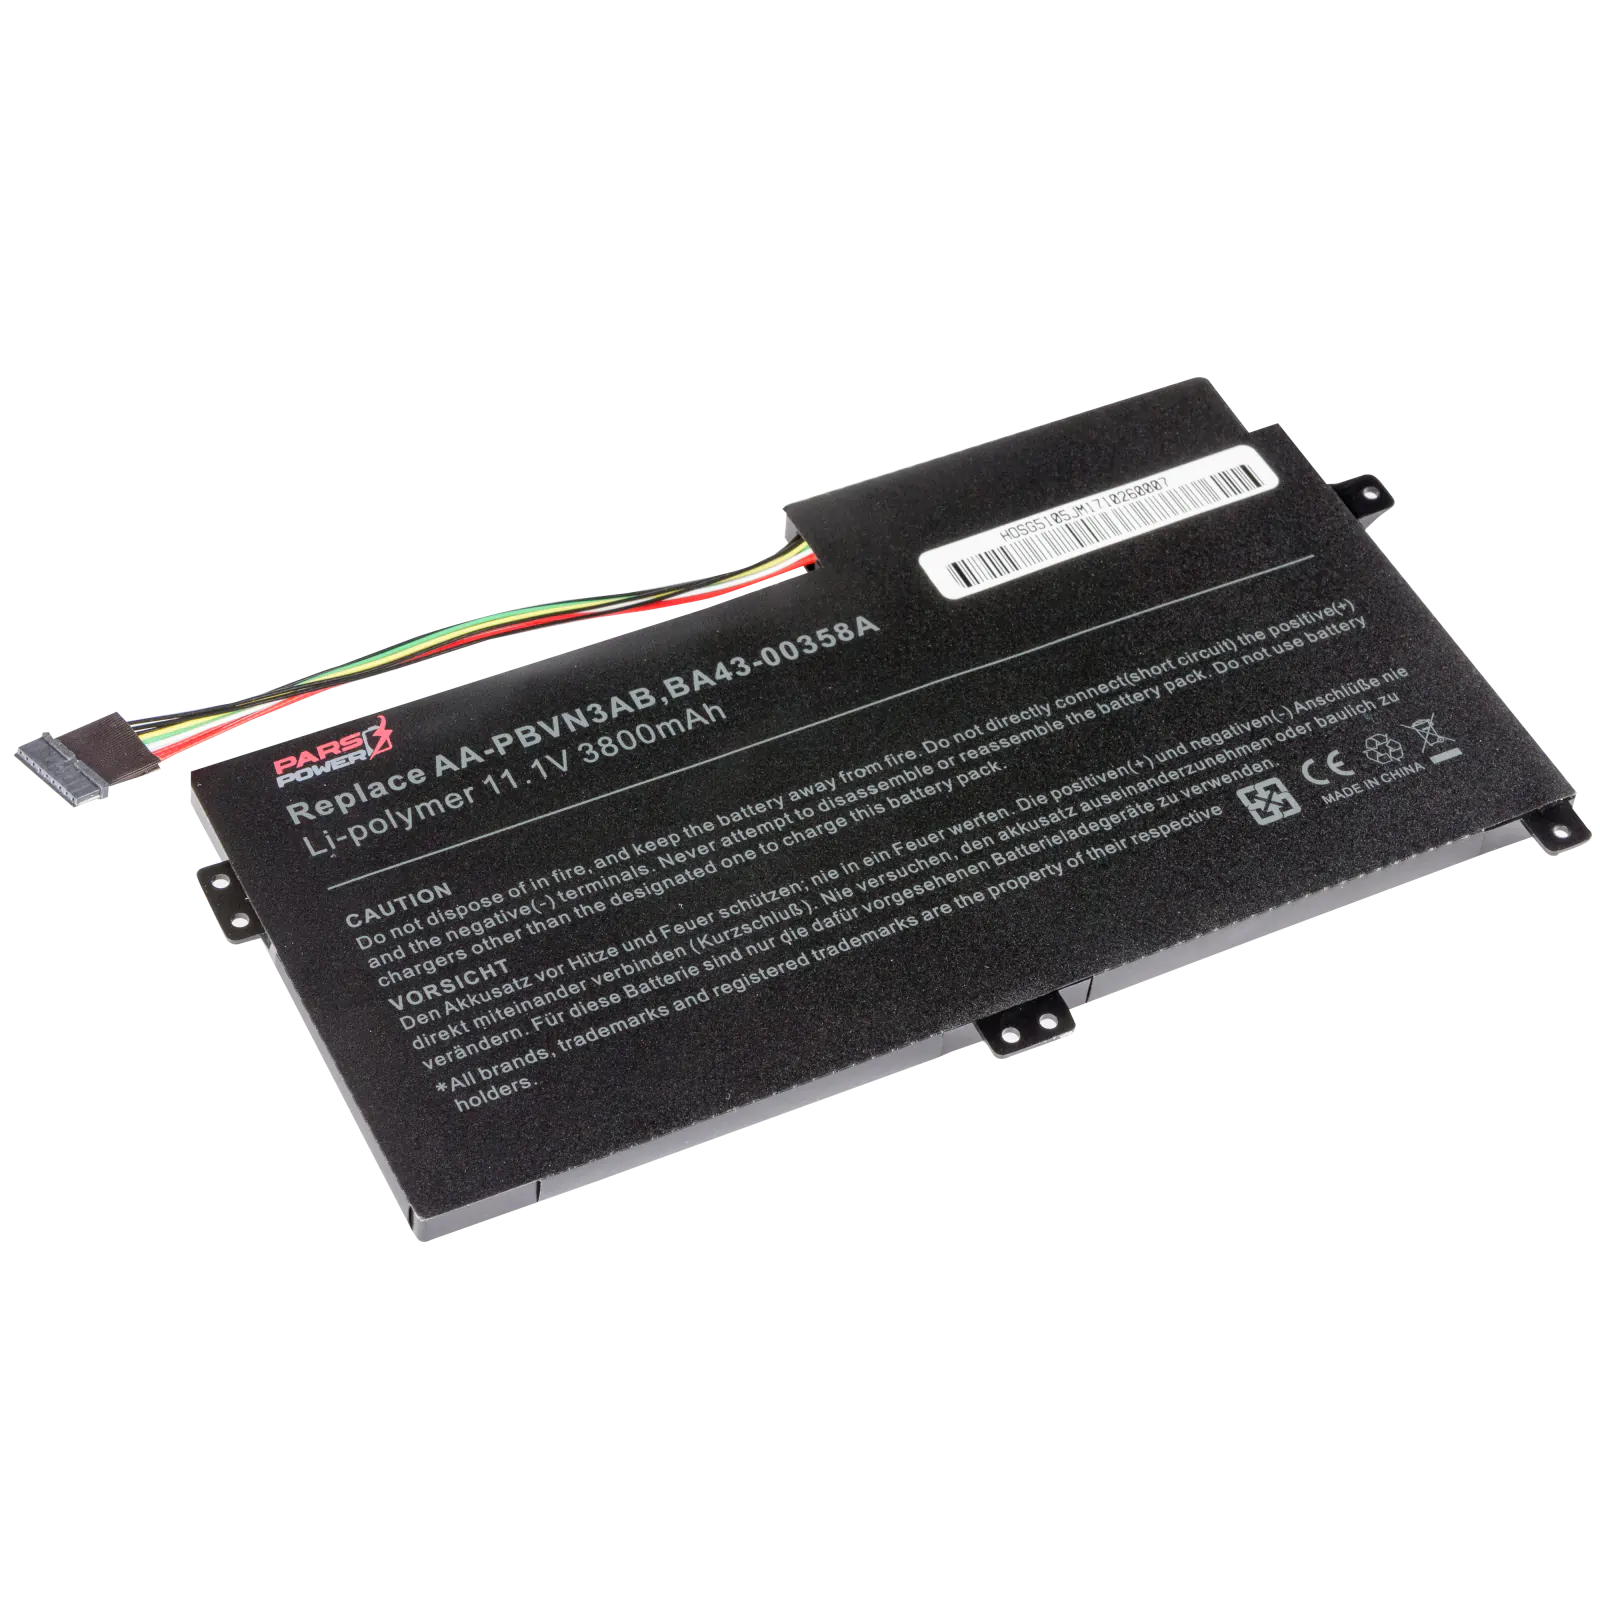 Samsung NP370R4E, NP370R4V, NP370R5E Notebook Batarya - Pil (Pars Power)